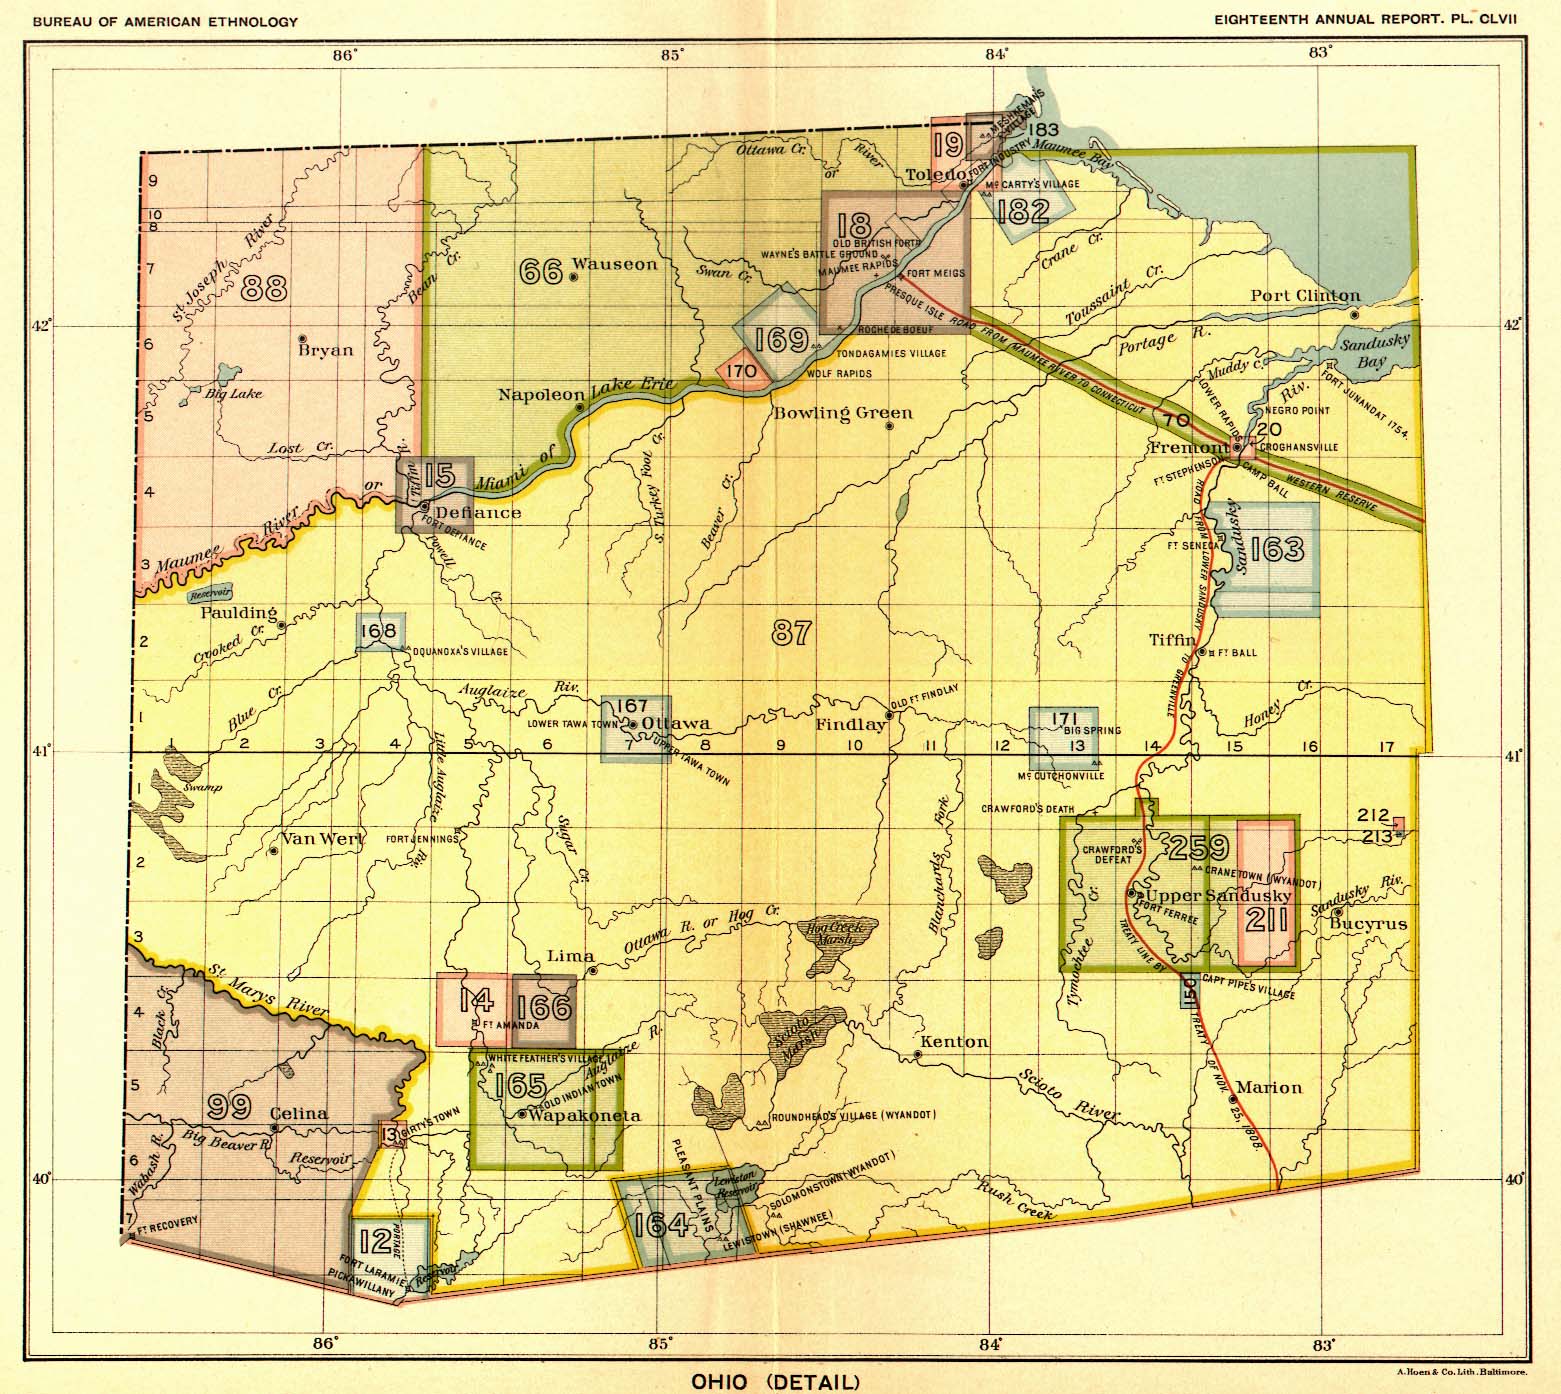 Ohio (Detail), Map 50